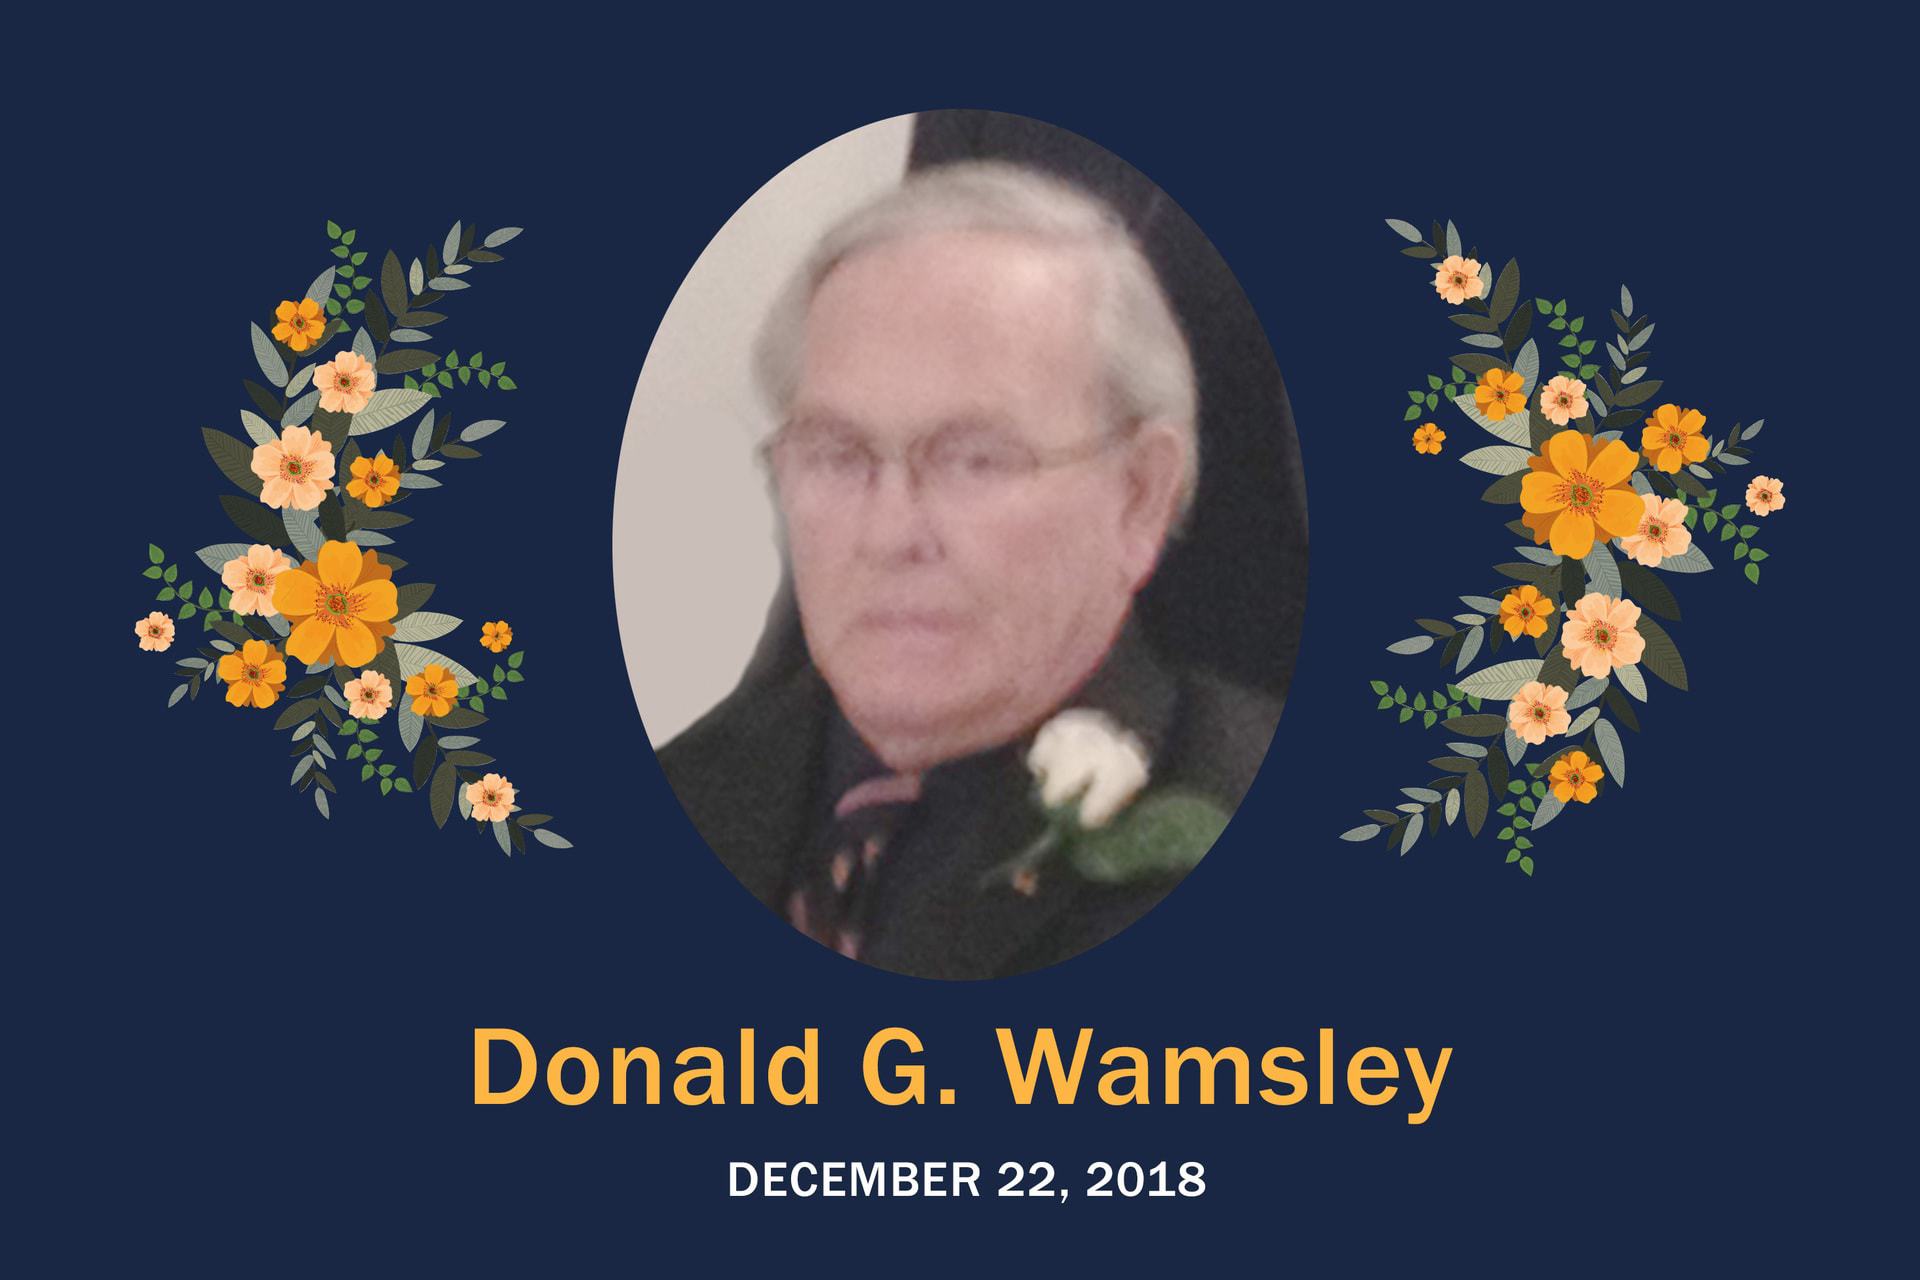 Obituary Donald Wamsley